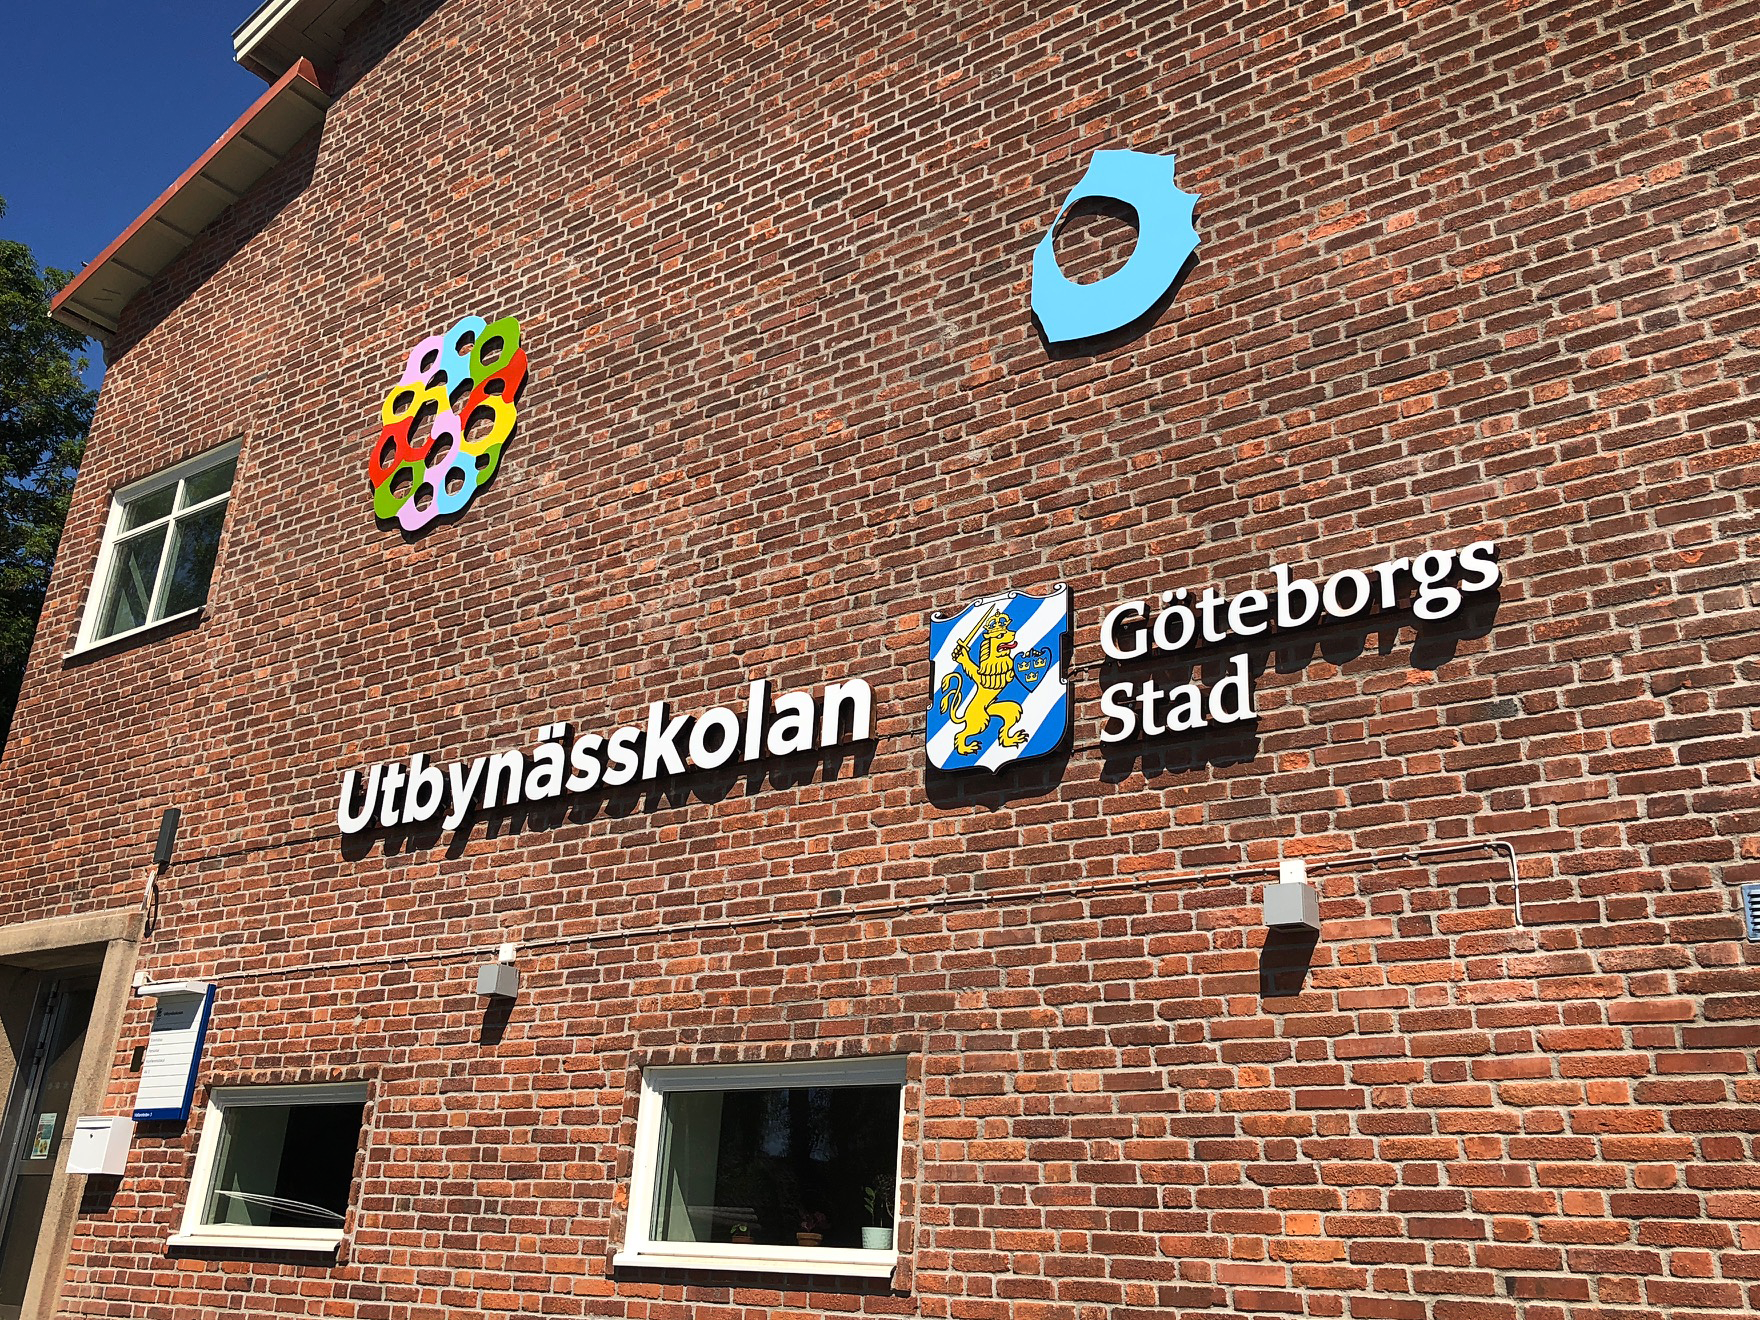 Read more about the article Utbynässkolan